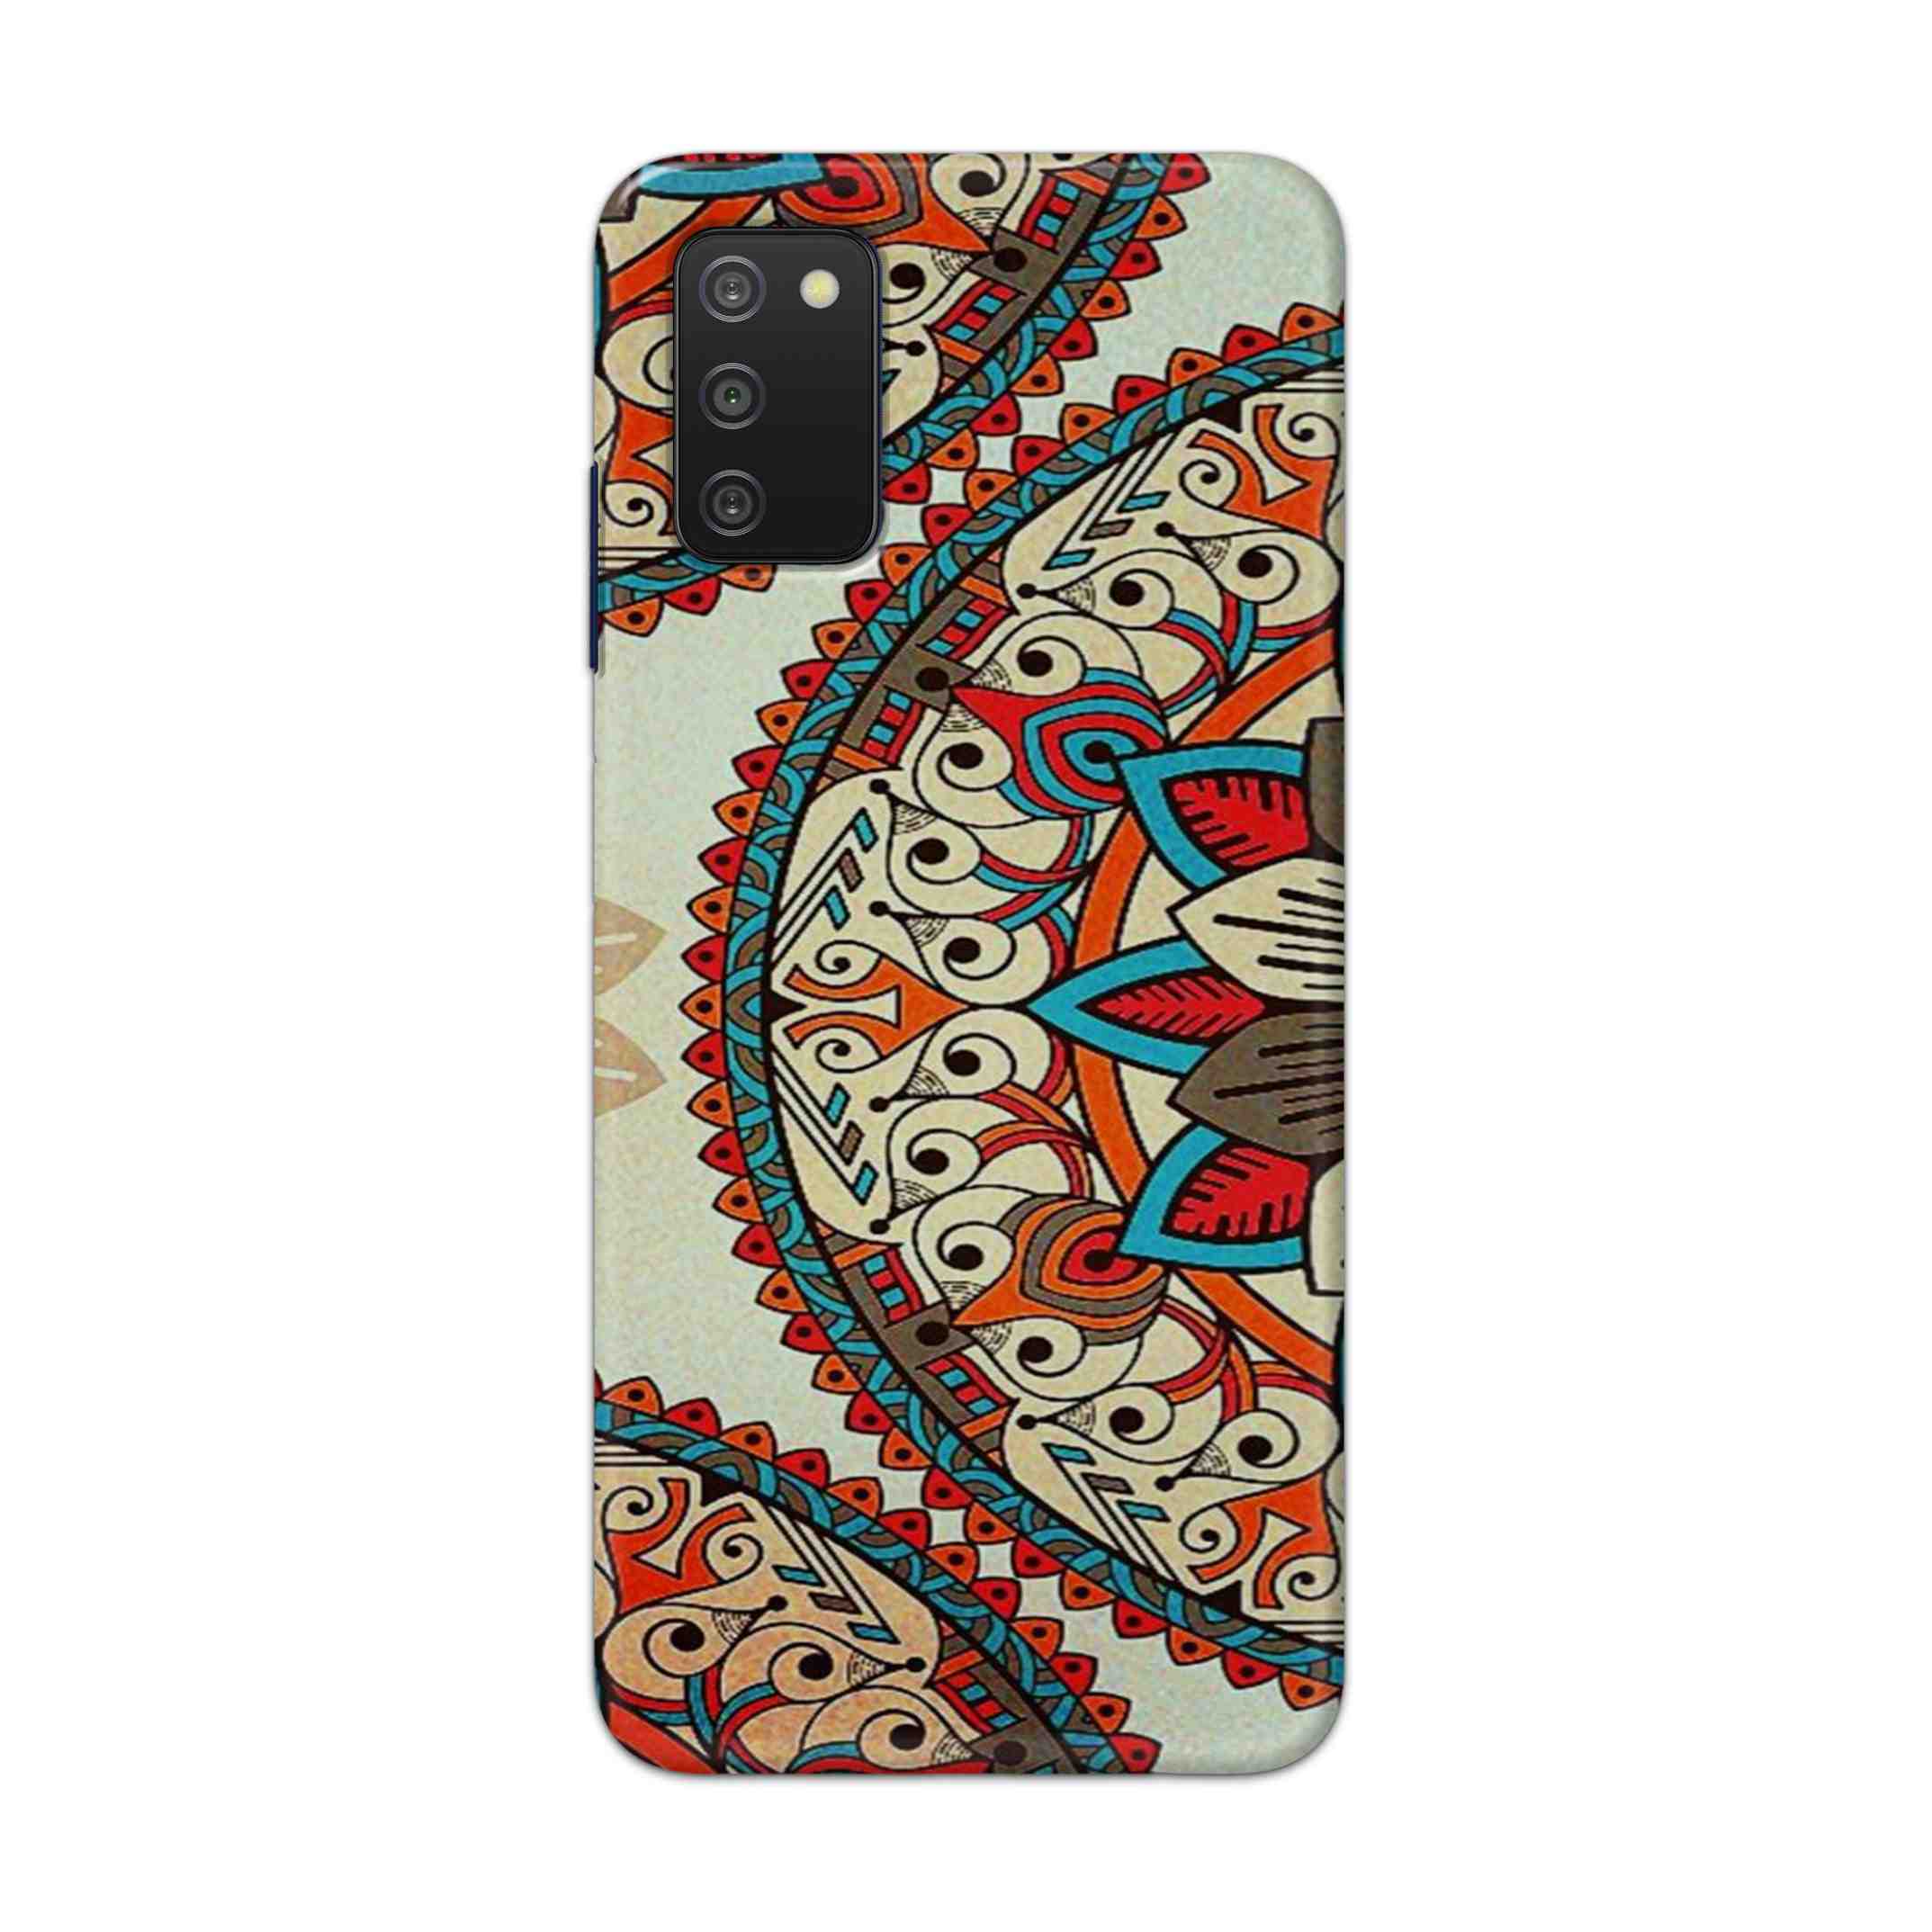 Buy Aztec Mandalas Hard Back Mobile Phone Case Cover For Samsung A03s Online